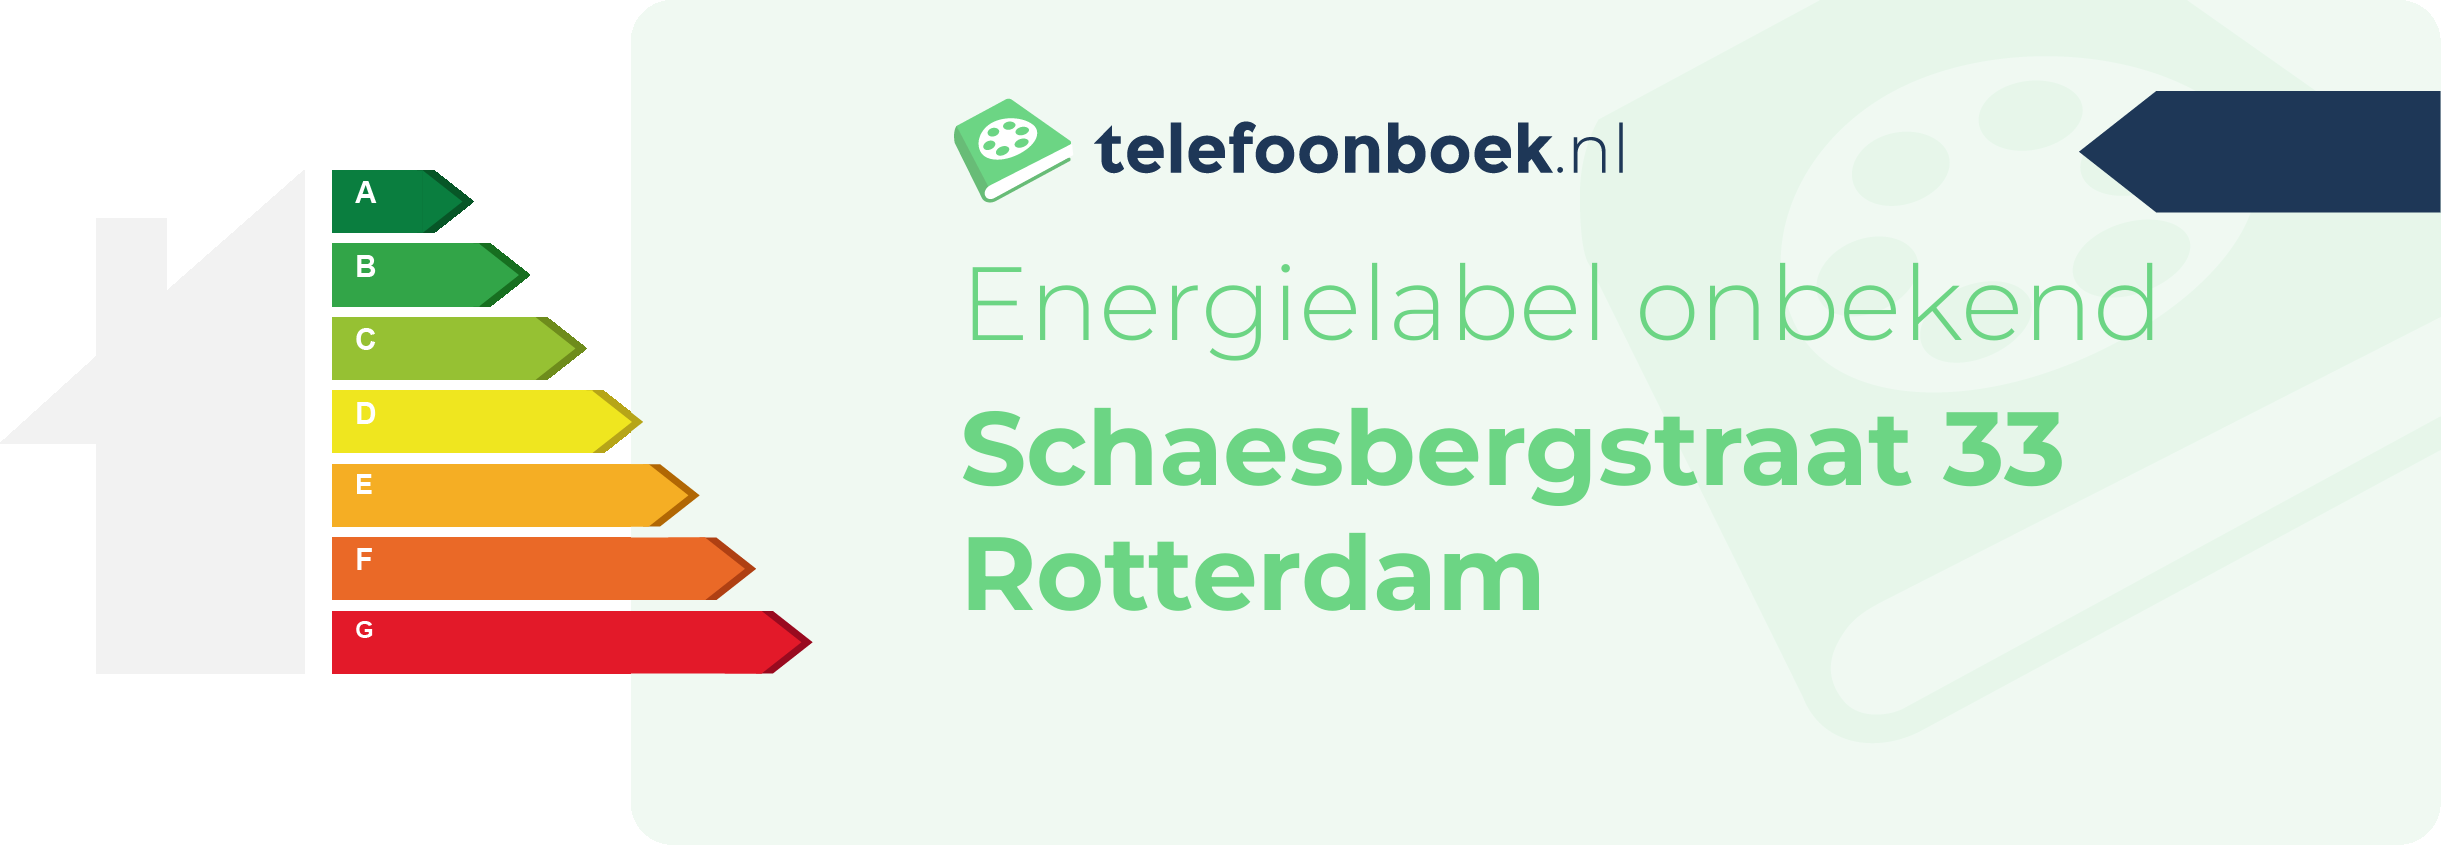 Energielabel Schaesbergstraat 33 Rotterdam